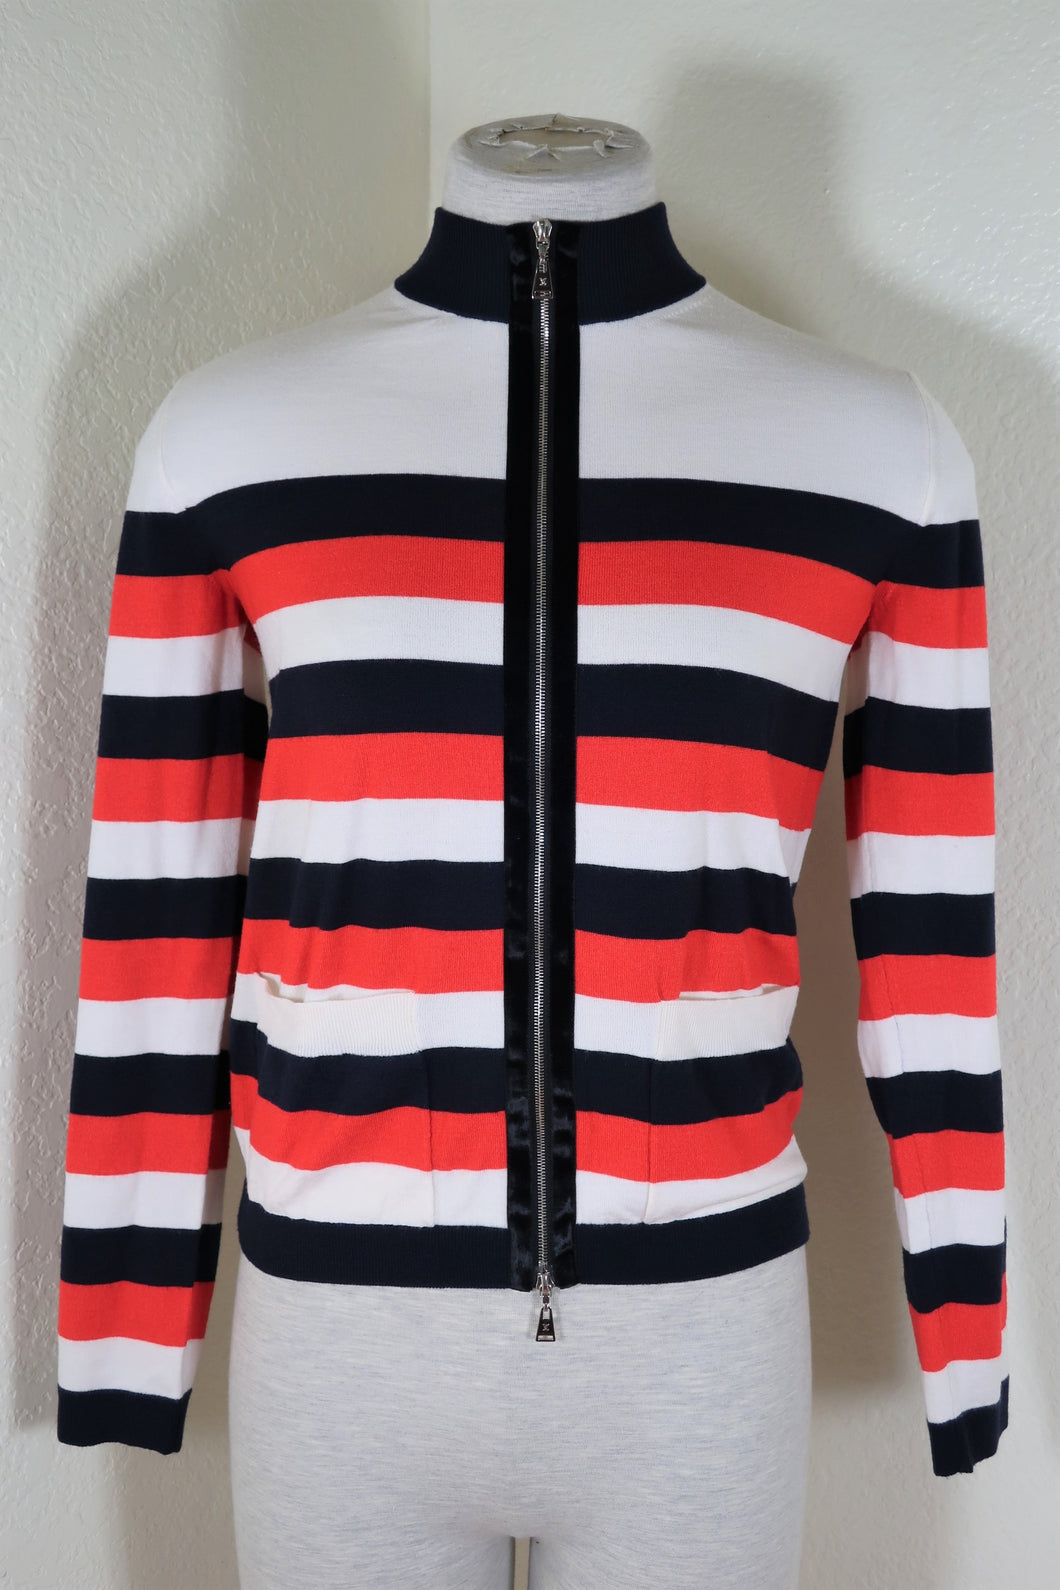 LOUIS VUITTON Red Black Stripes Turtle Neck Wool Zip Sweater Cardigan Jacket XS Small 2 3 4